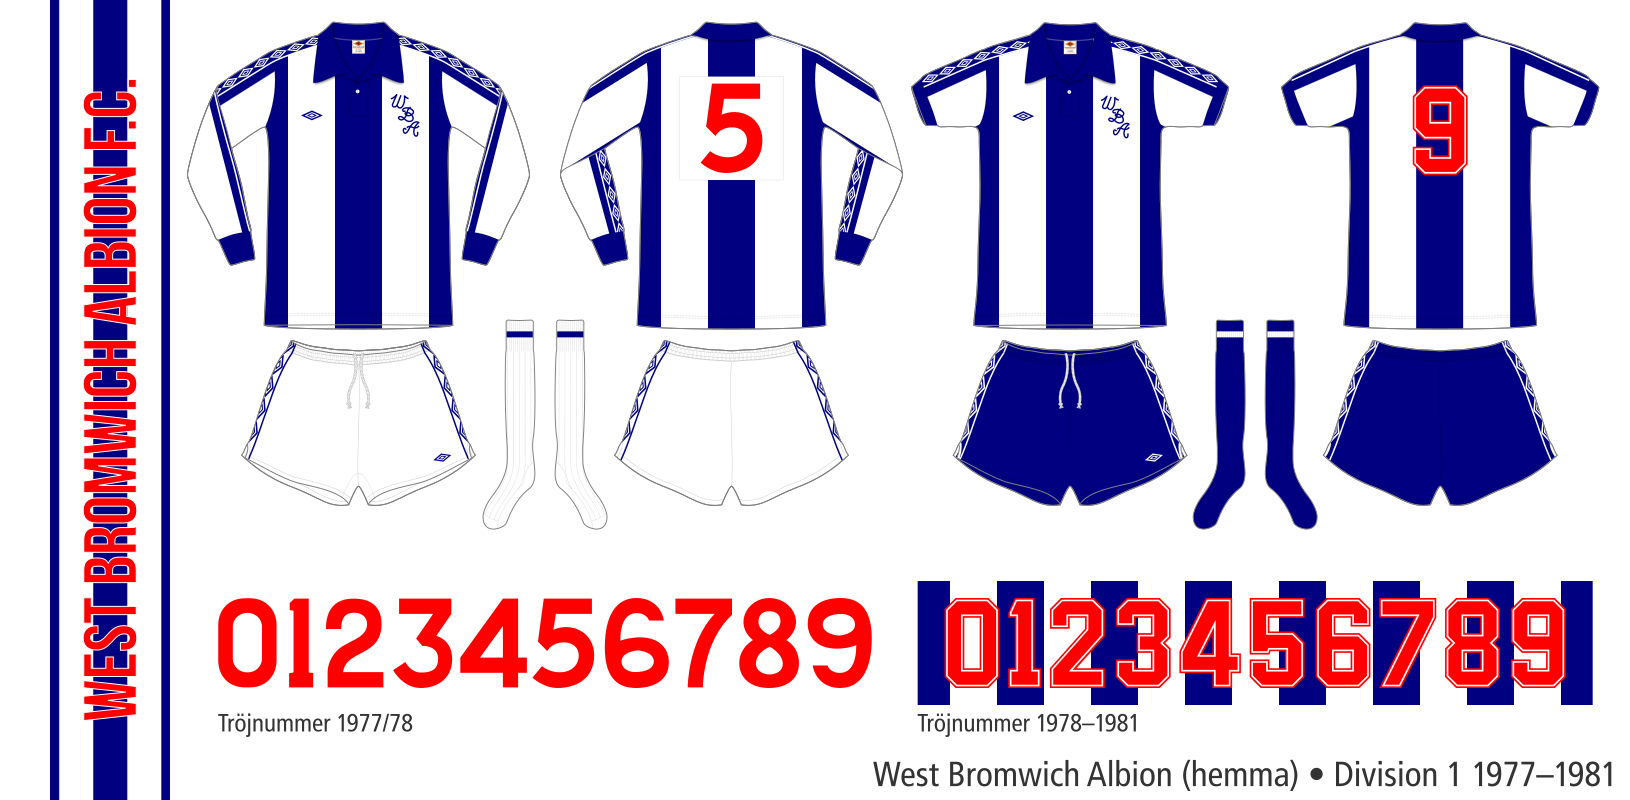 West Bromwich Albion 1977–1981 (hemma)